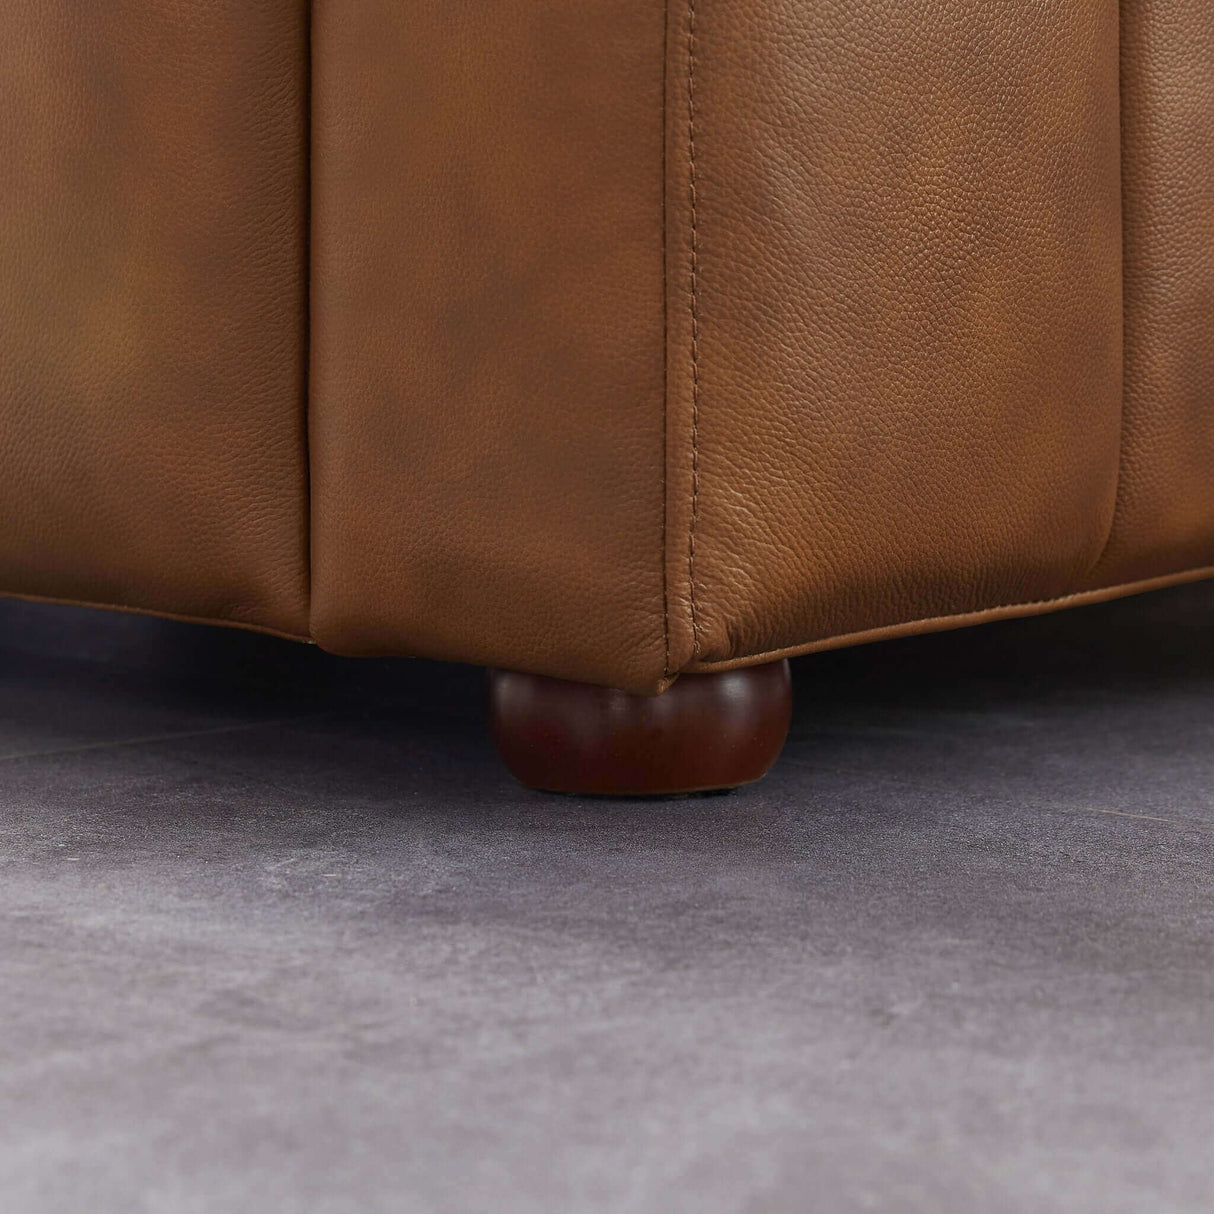 Elrosa Channel Tufted Sofa Cognac Genuine Leather